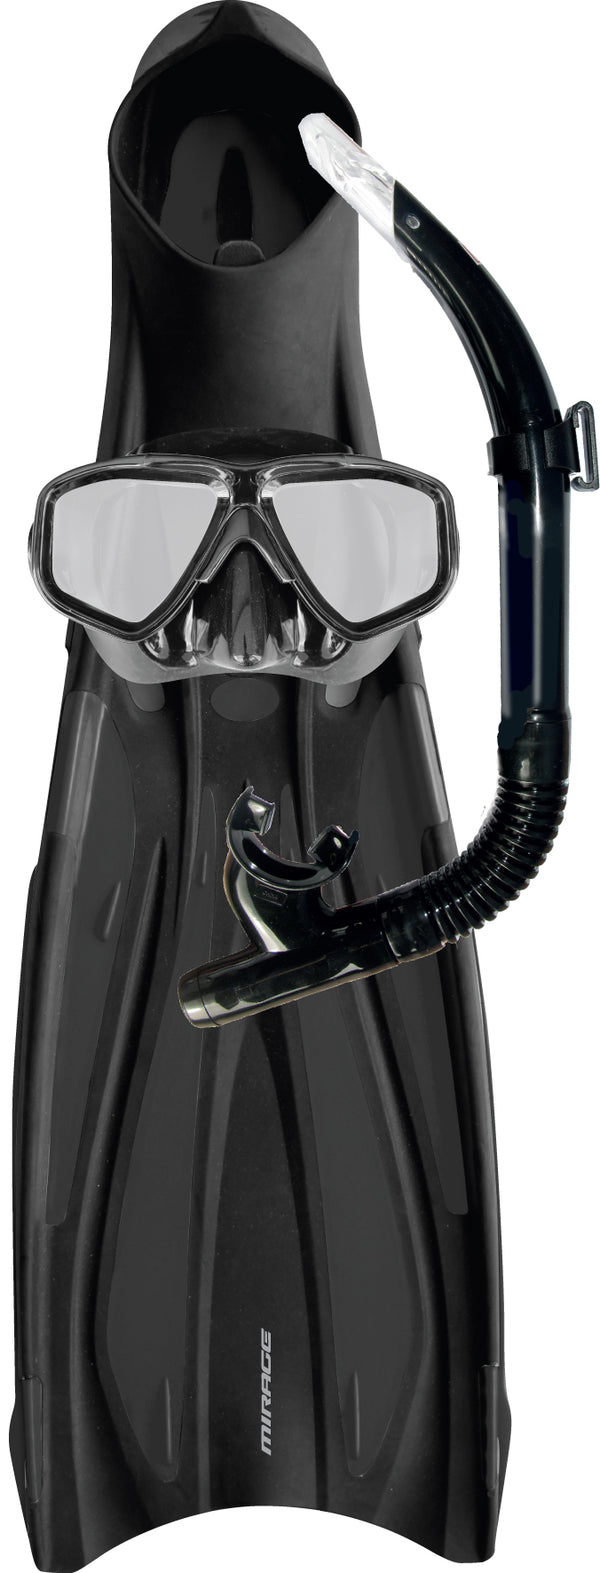 Mirage Barracuda Silicone Mask, Snorkel & Fin Set -Black - M (Adult)